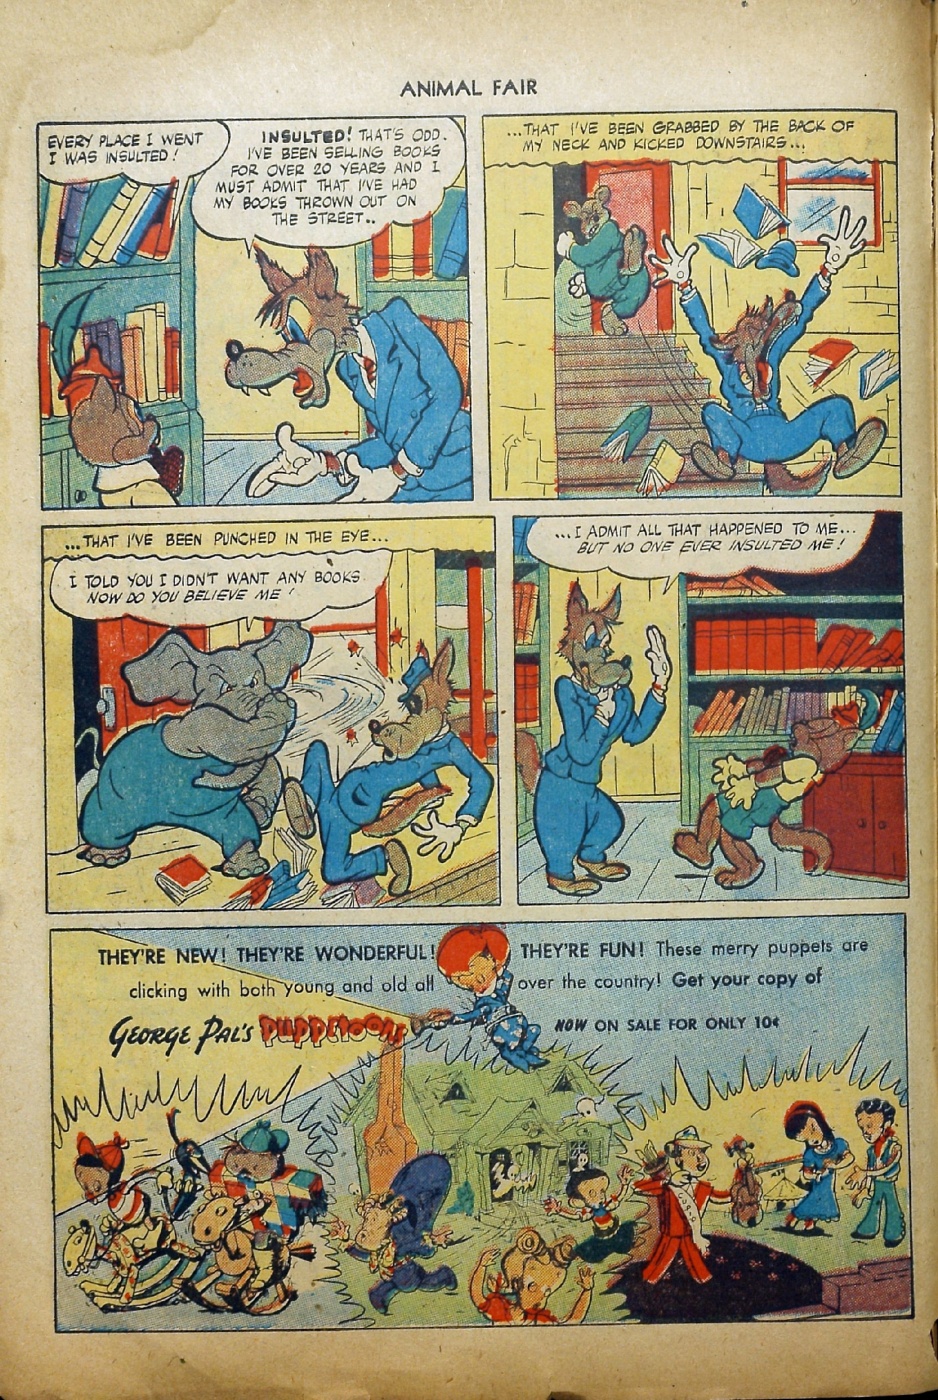 Funny-Comic-Strips-Animal-Fair (14)